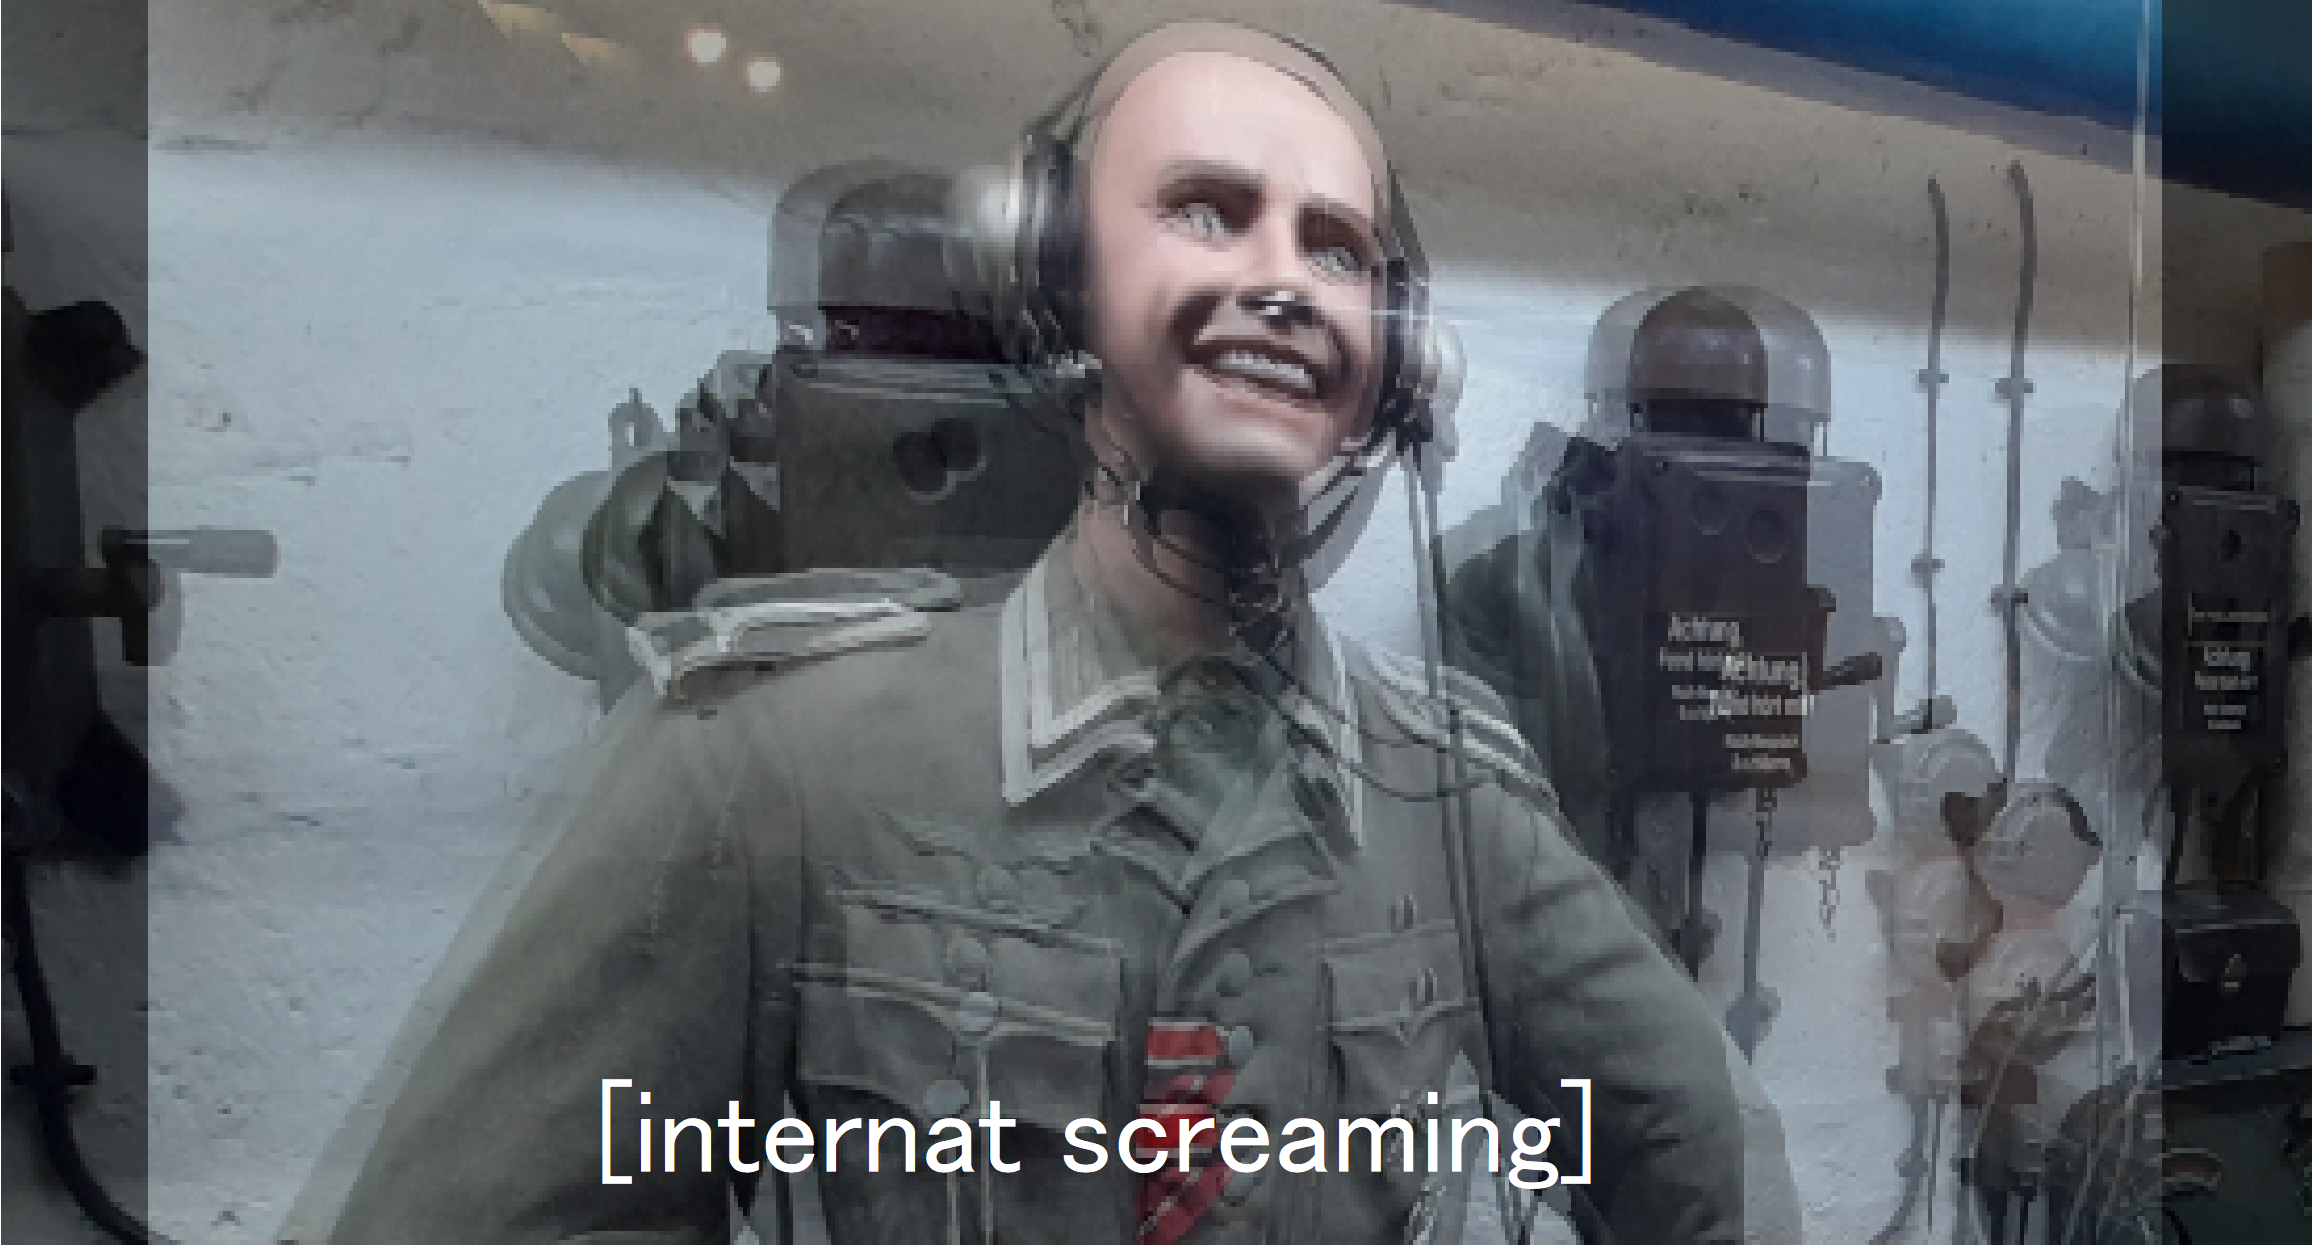 Internat screaming Nazis Blank Meme Template